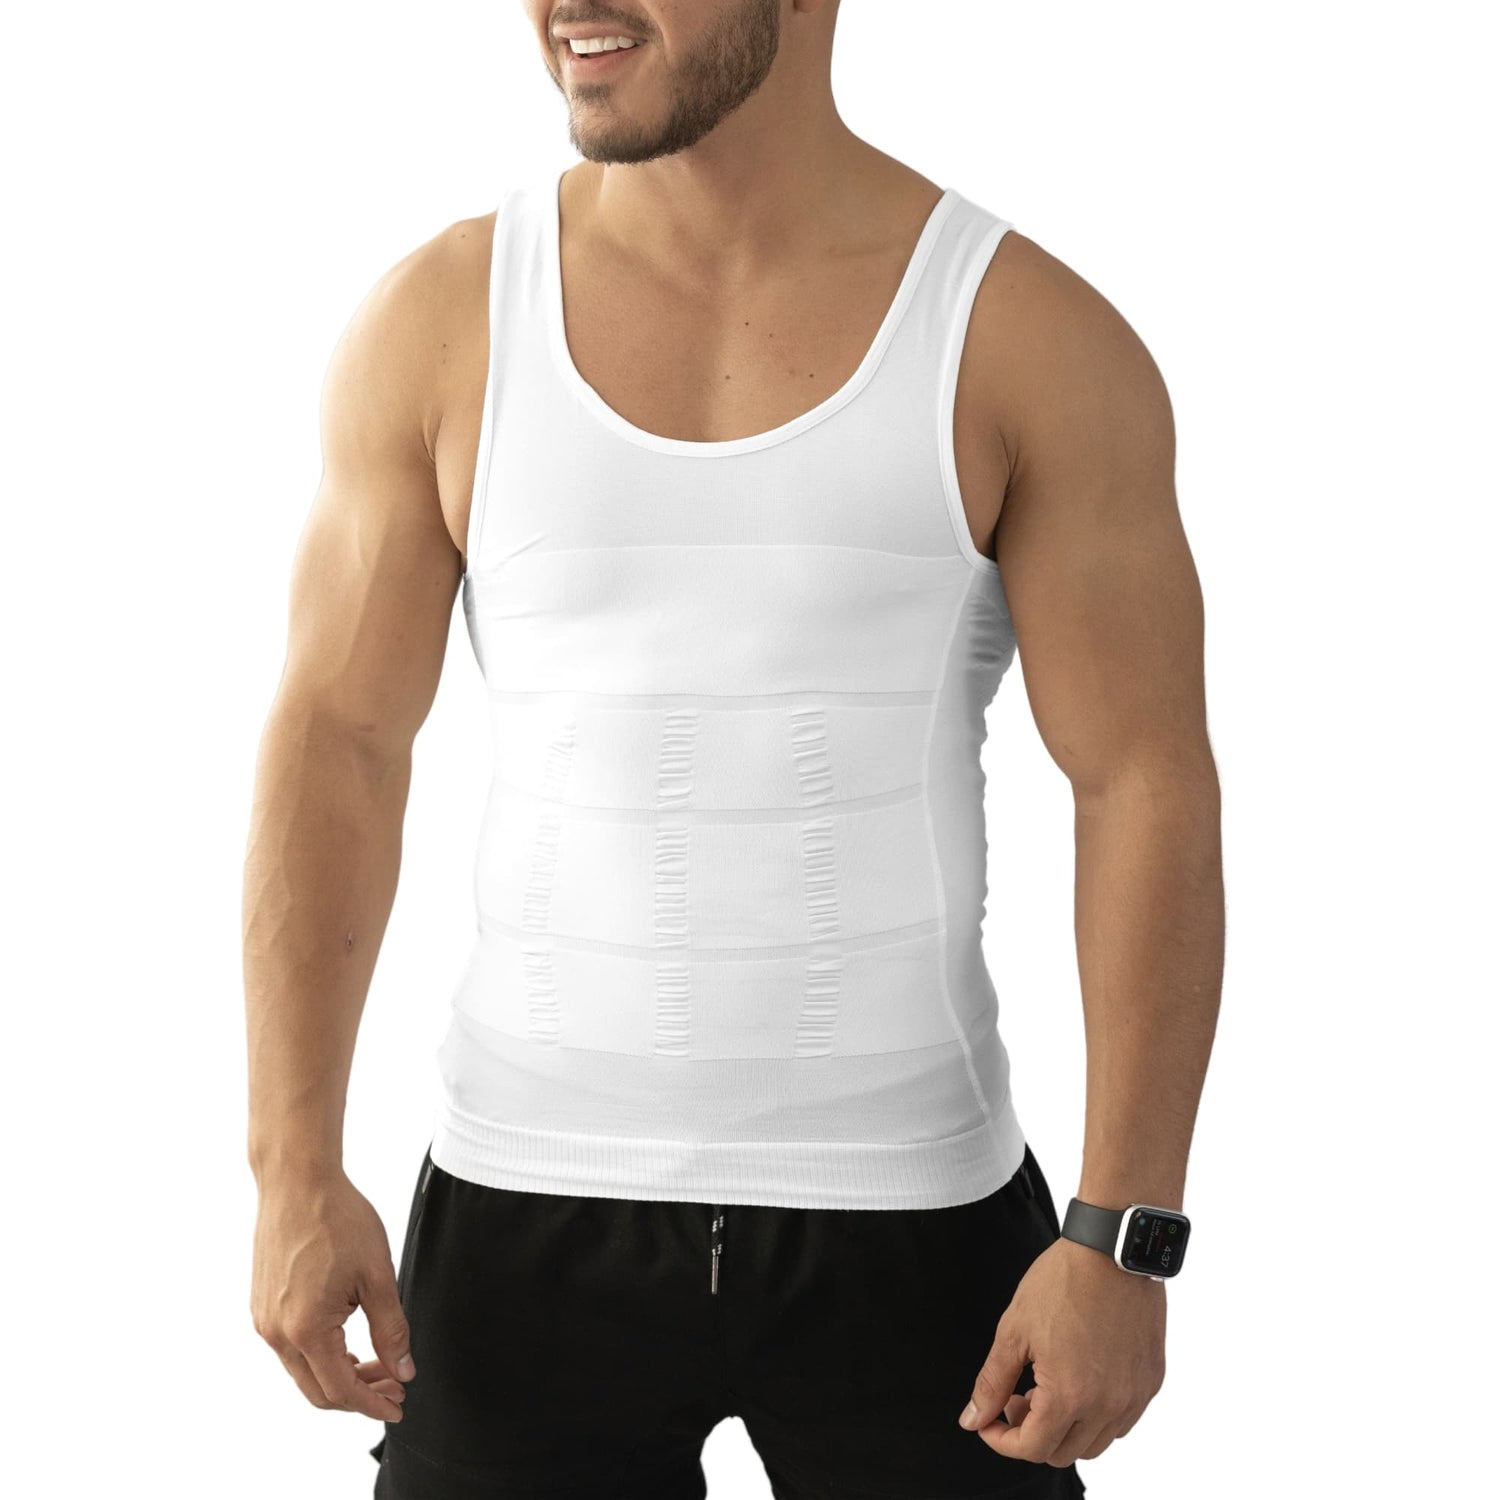 The Kewlioo Sauna Vest Men Slimming Body Belly Shaper Underwear